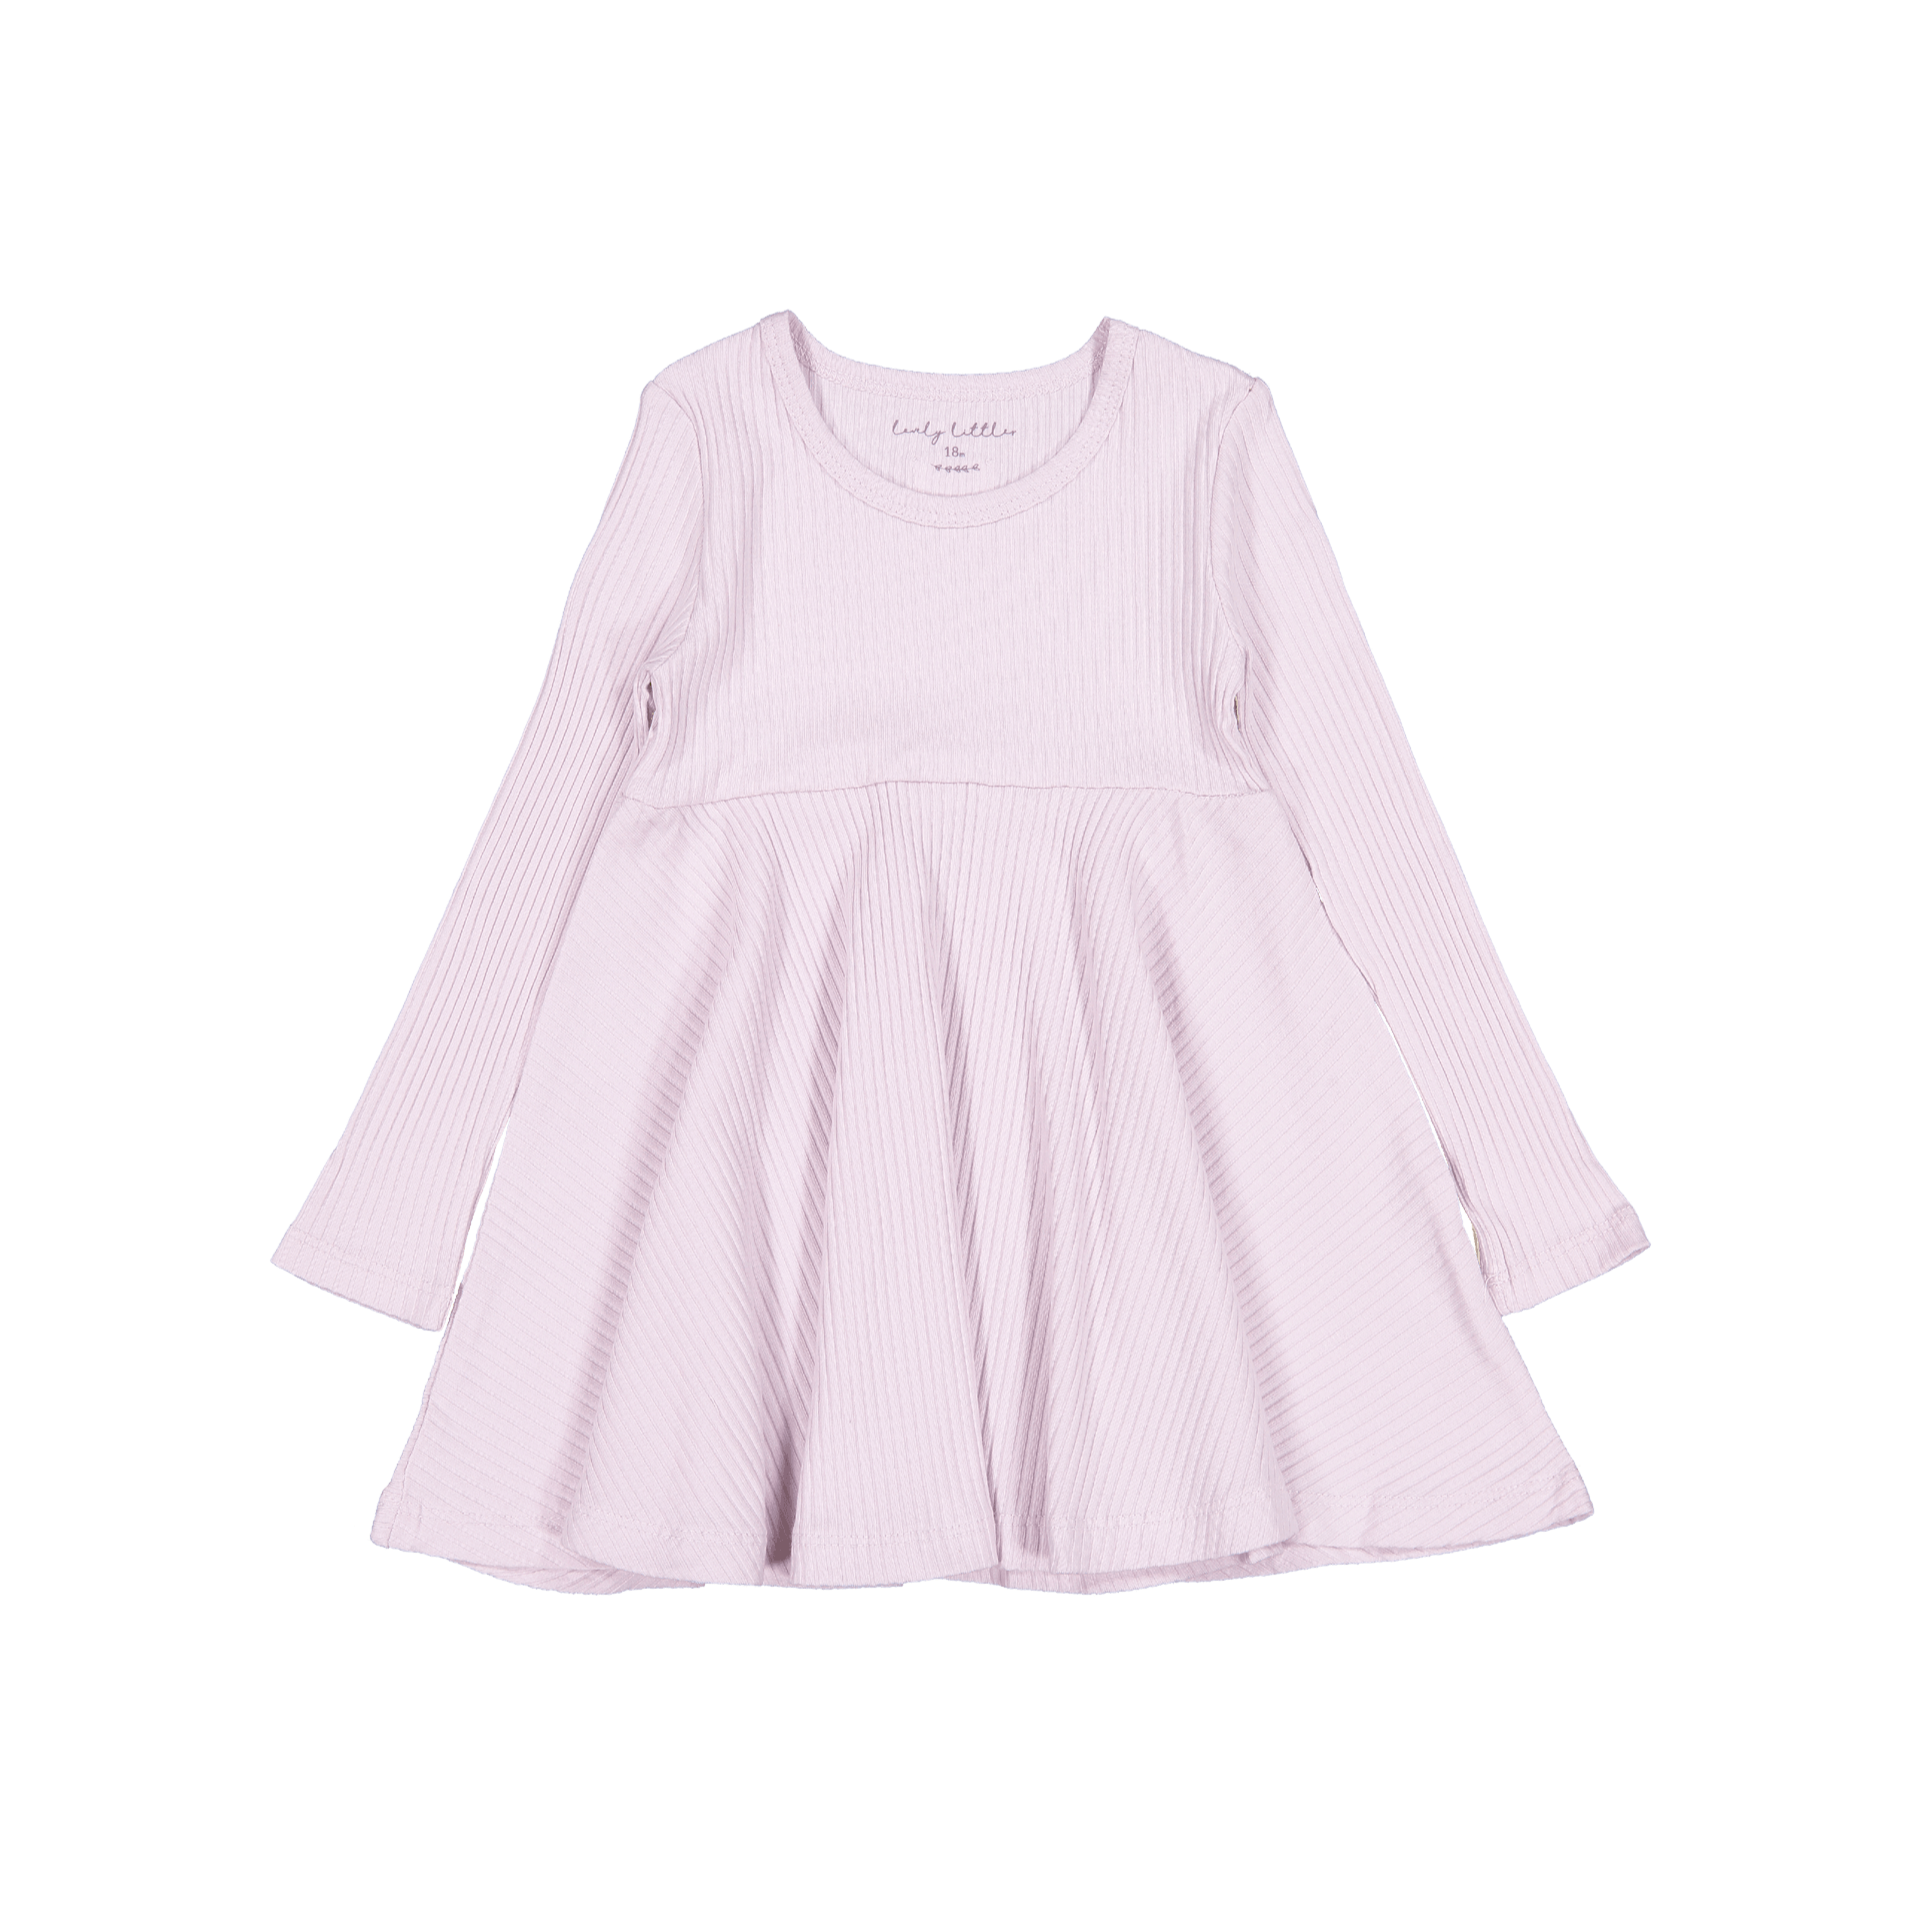 The Long Sleeve Dress - Lilac - HoneyBug 